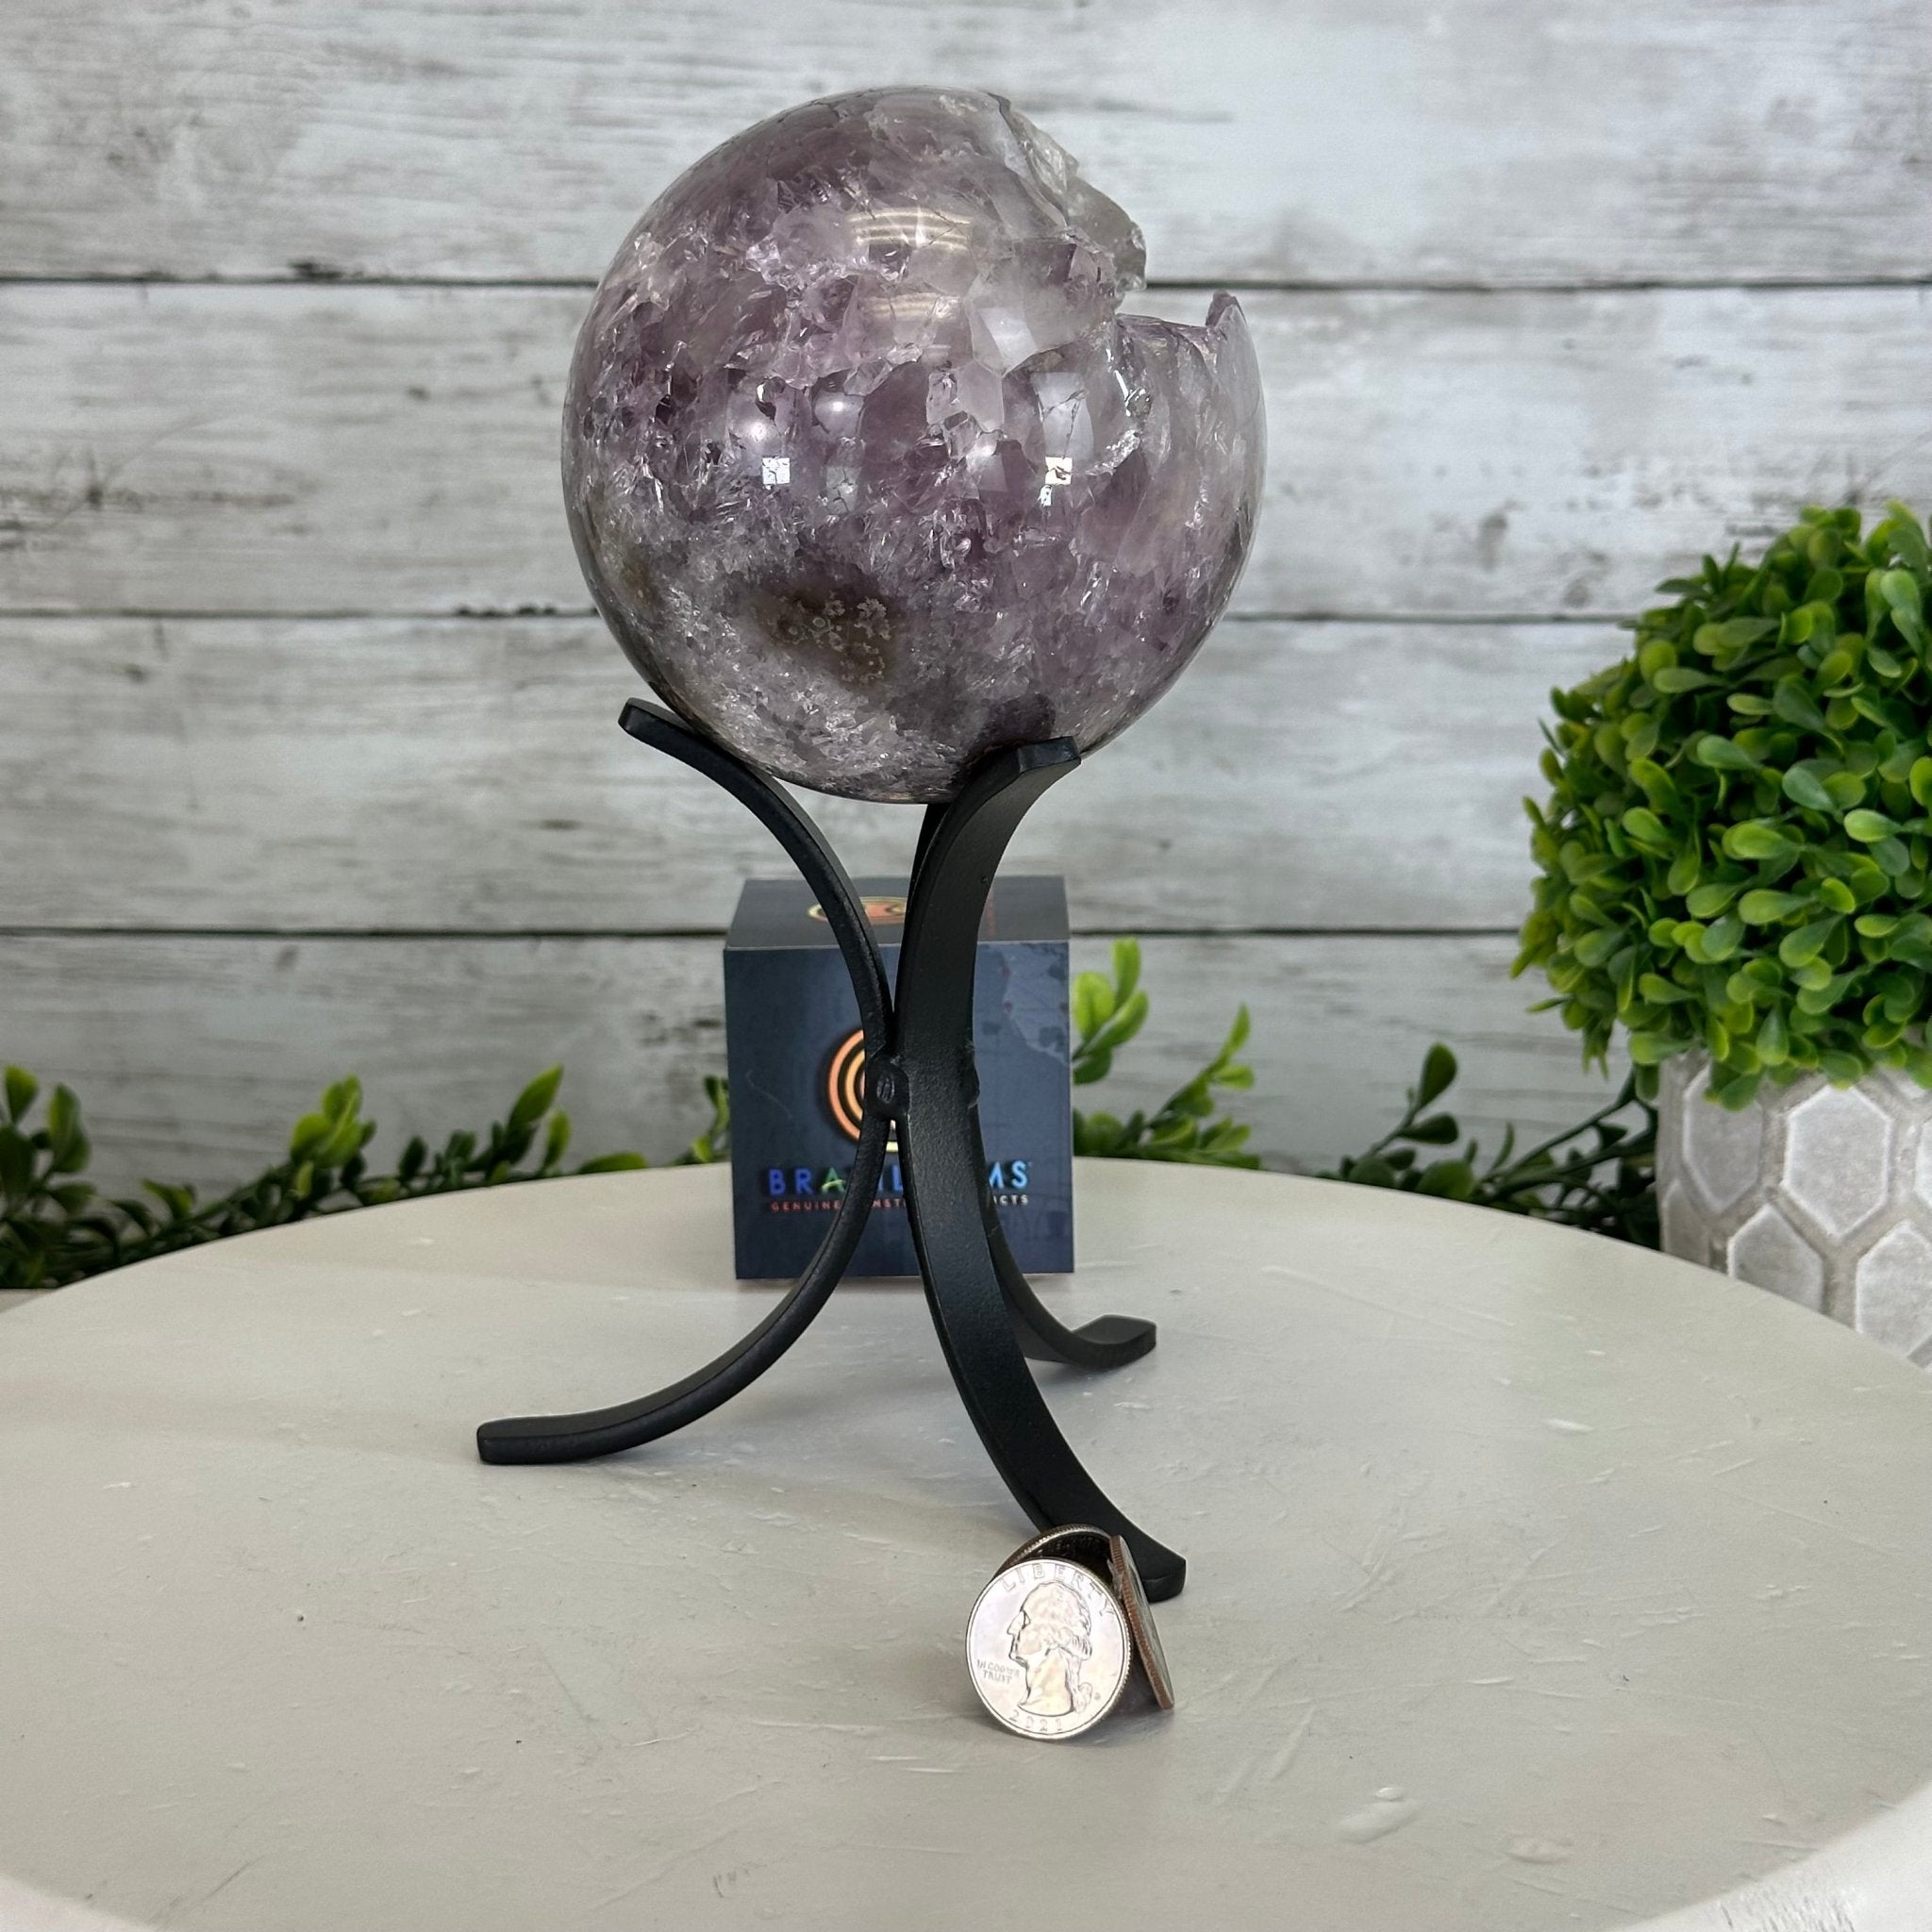 Druzy Amethyst Sphere on a Metal Stand, 3.4 lbs & 8.7" Tall #5630-0054 - Brazil GemsBrazil GemsDruzy Amethyst Sphere on a Metal Stand, 3.4 lbs & 8.7" Tall #5630-0054Spheres5630-0054